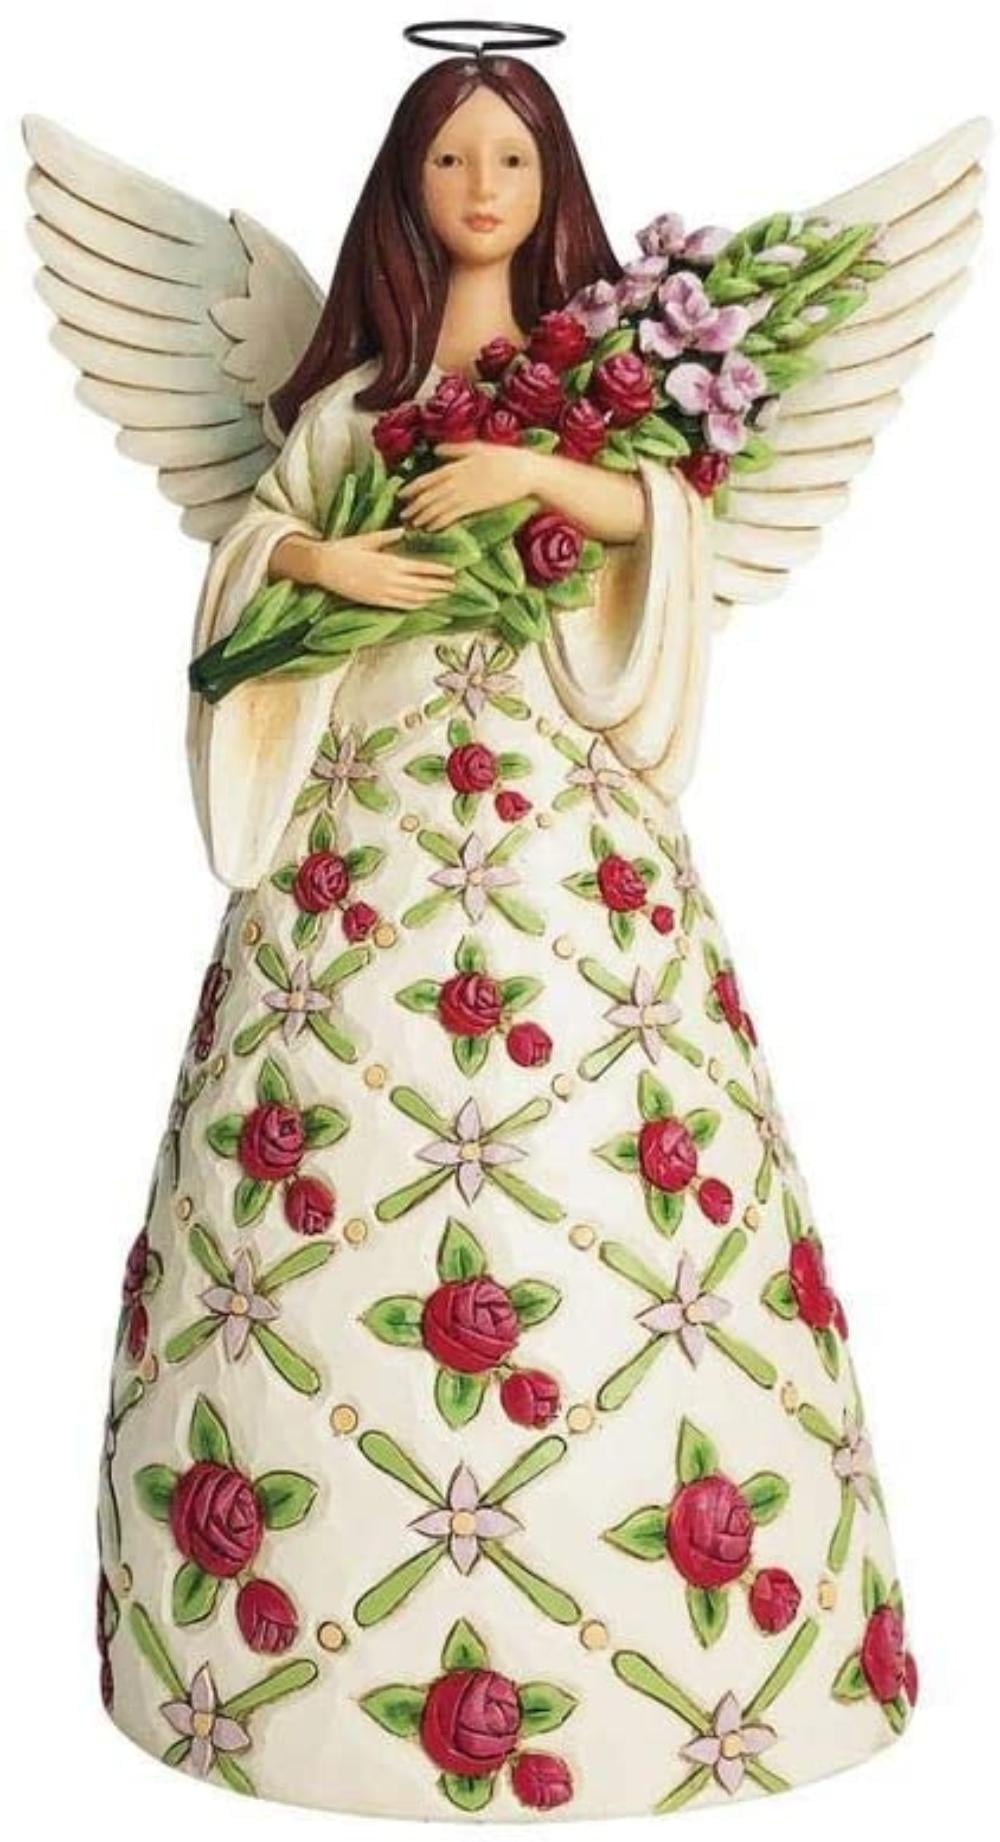 Enesco Jim Shore Heartwood Creek Angel with Red Roses Figurine 6007124 